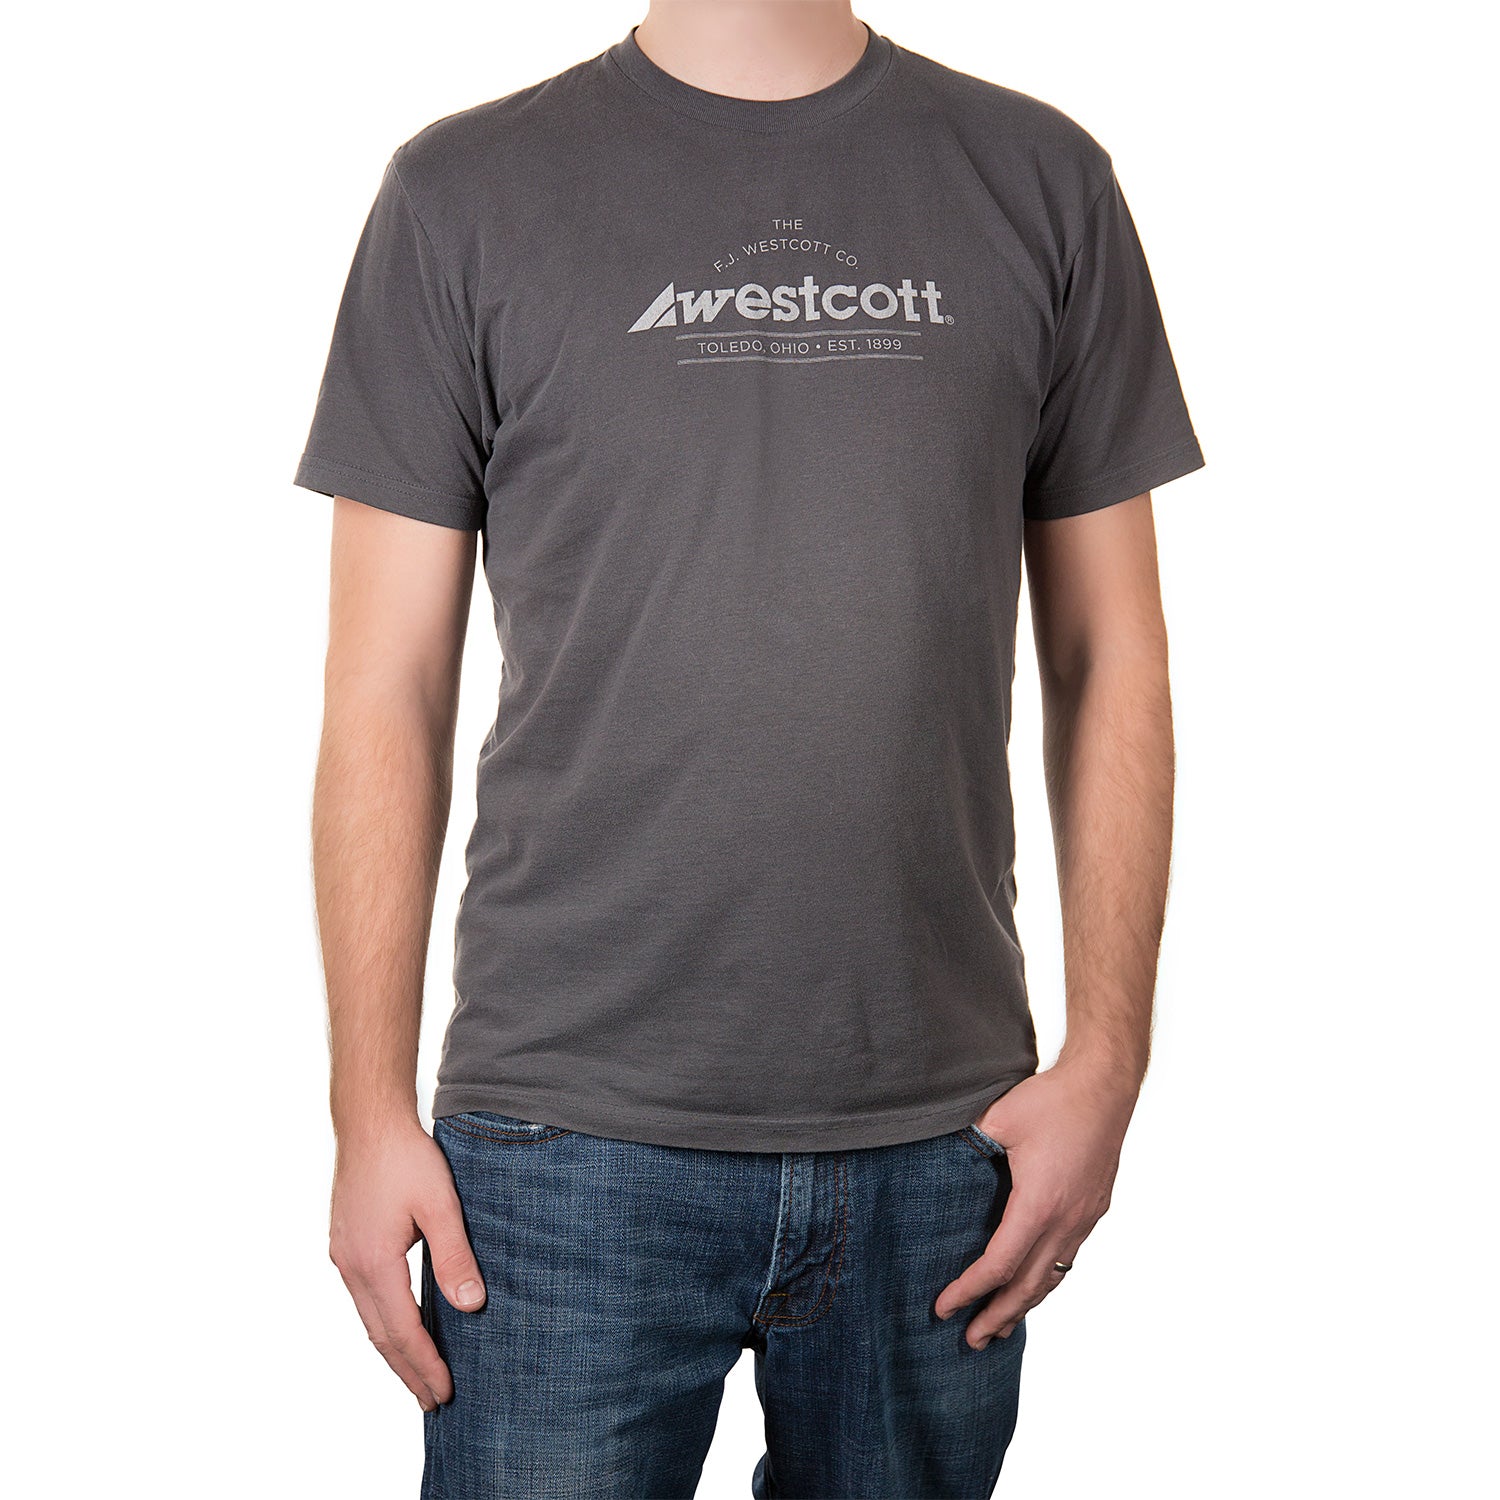 Westcott Shirt